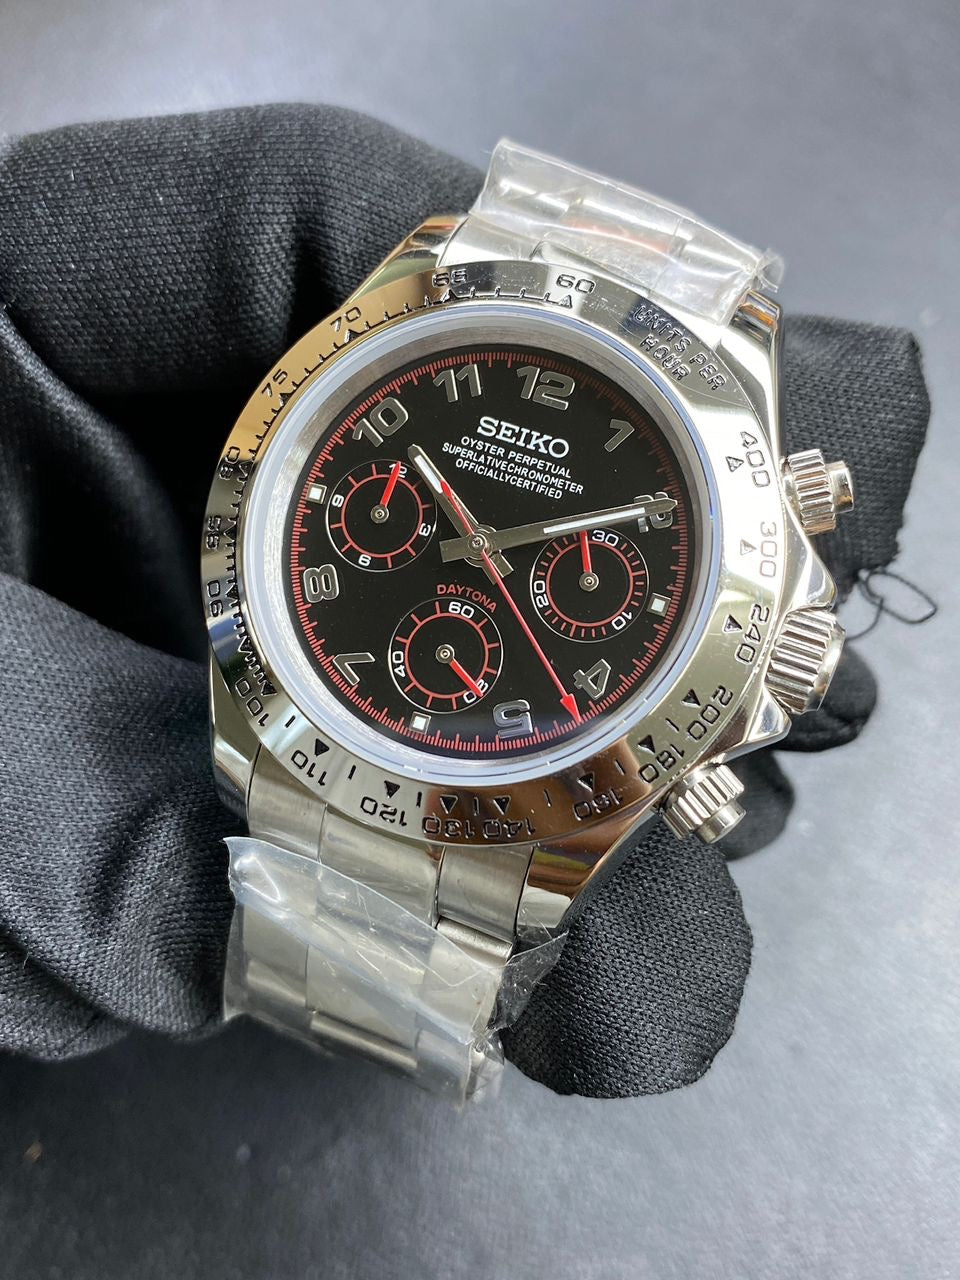 Seiko mod silver Daytona racing dial VK63 chronograph watch